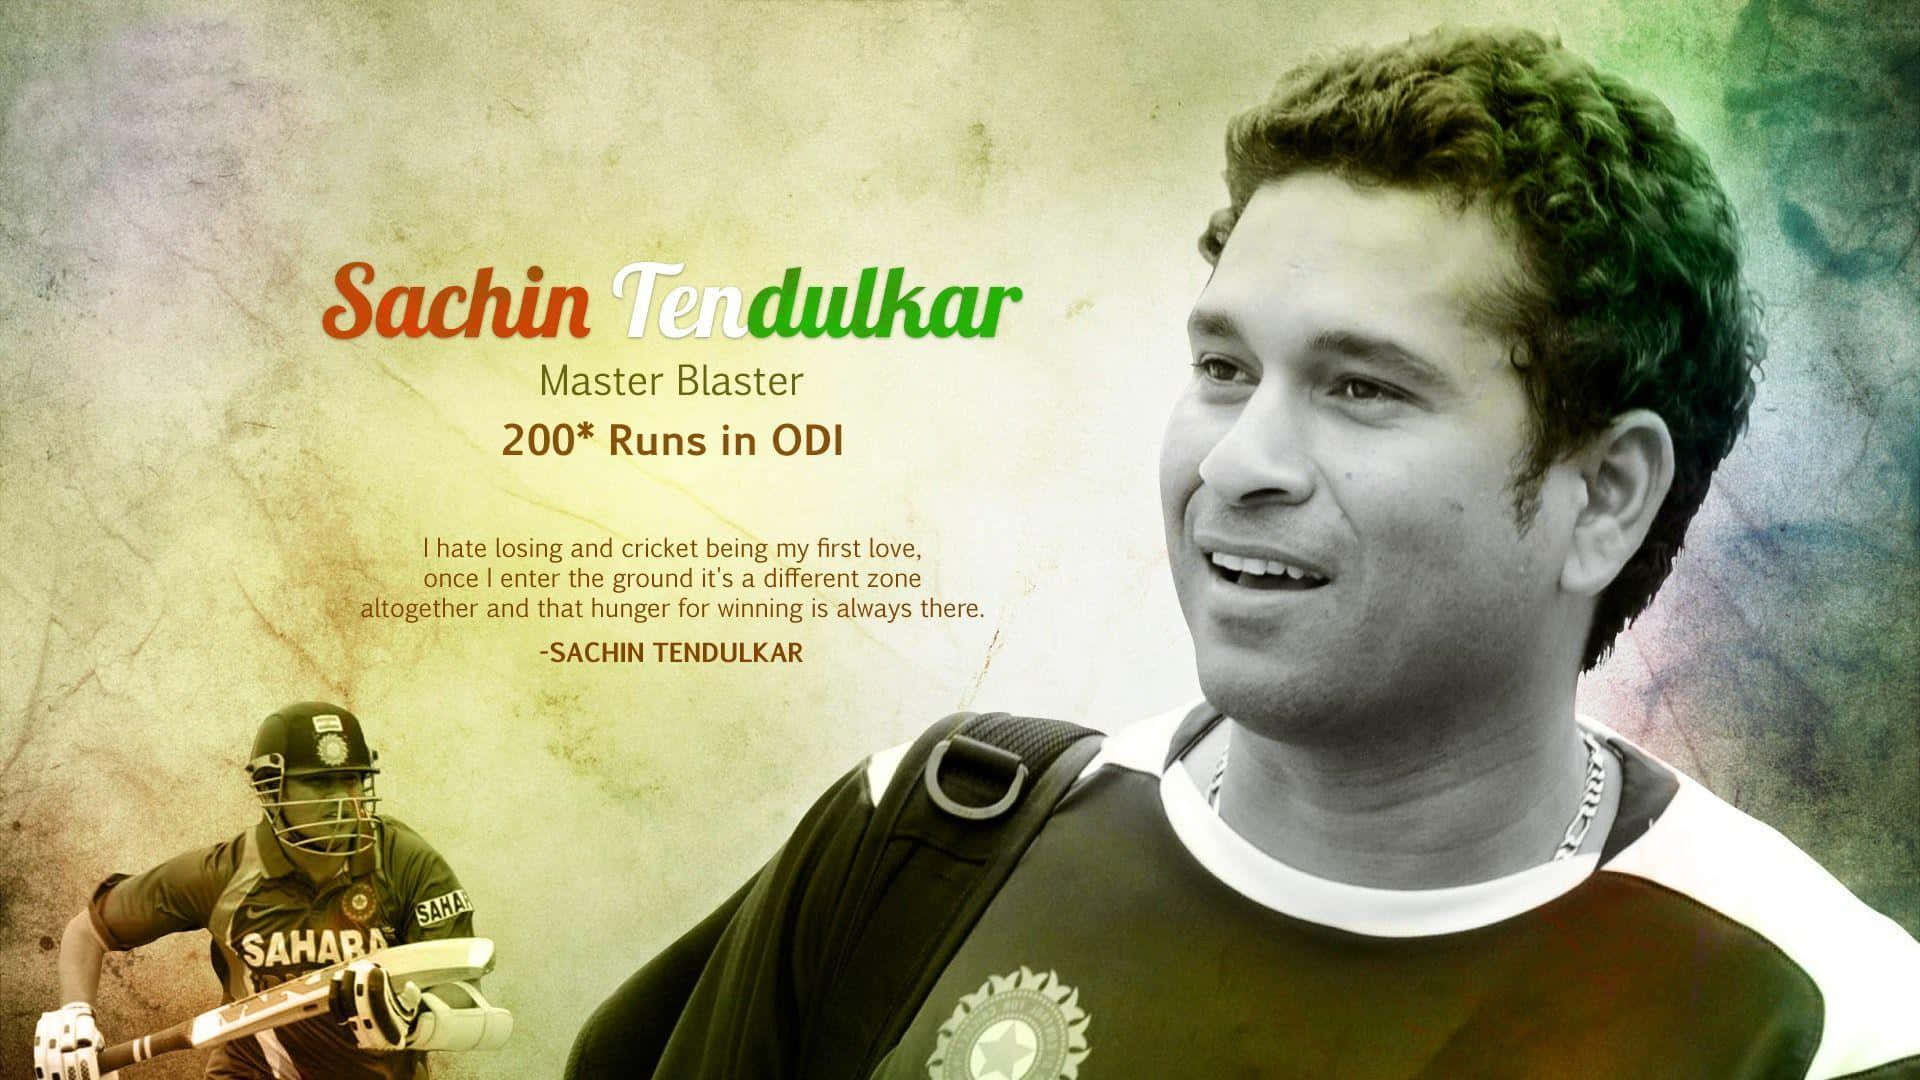 Ellegendario Jugador De Críquet Sachin Tendulkar Sonríe En Un Estadio Repleto. Fondo de pantalla